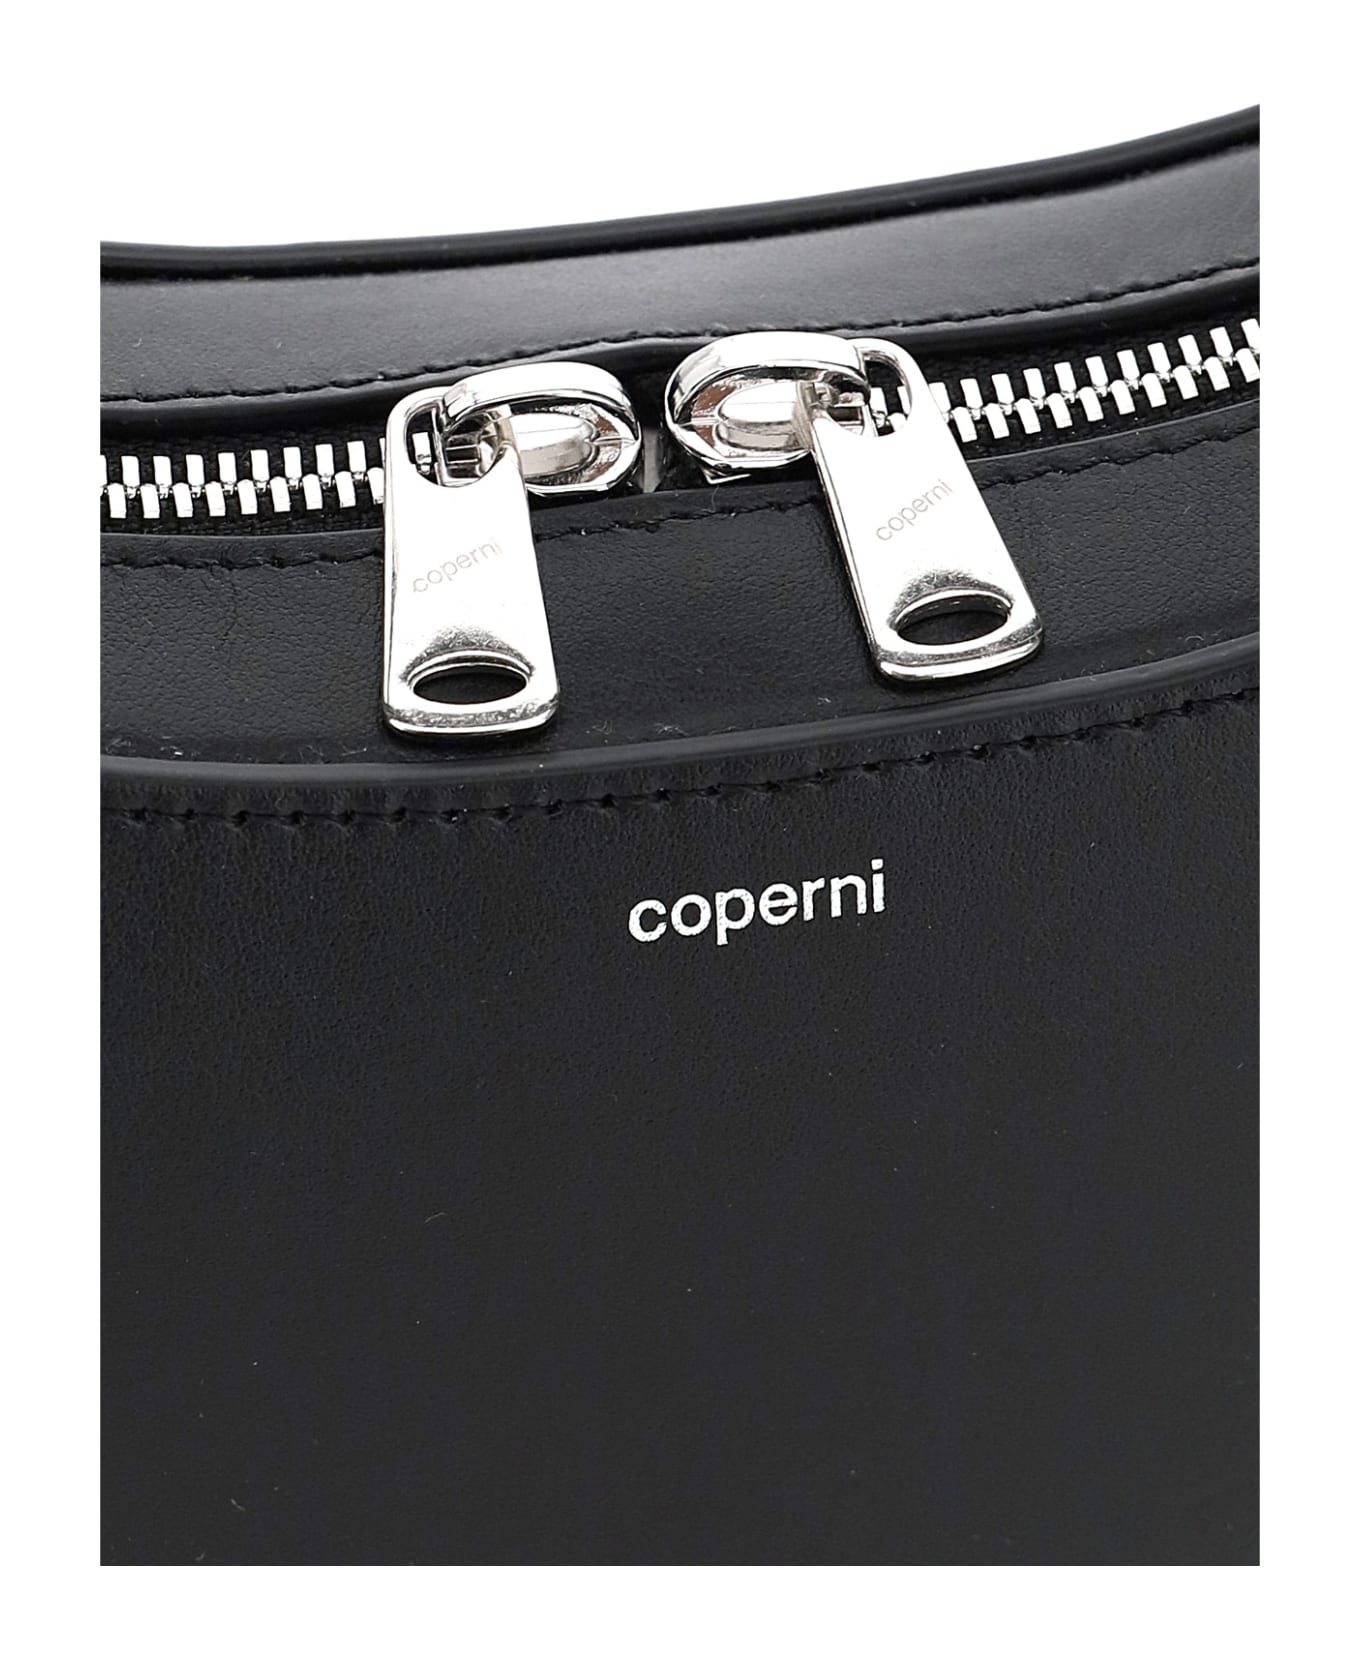 Coperni Black Leather Baguette Swipe Handbag - BLACK